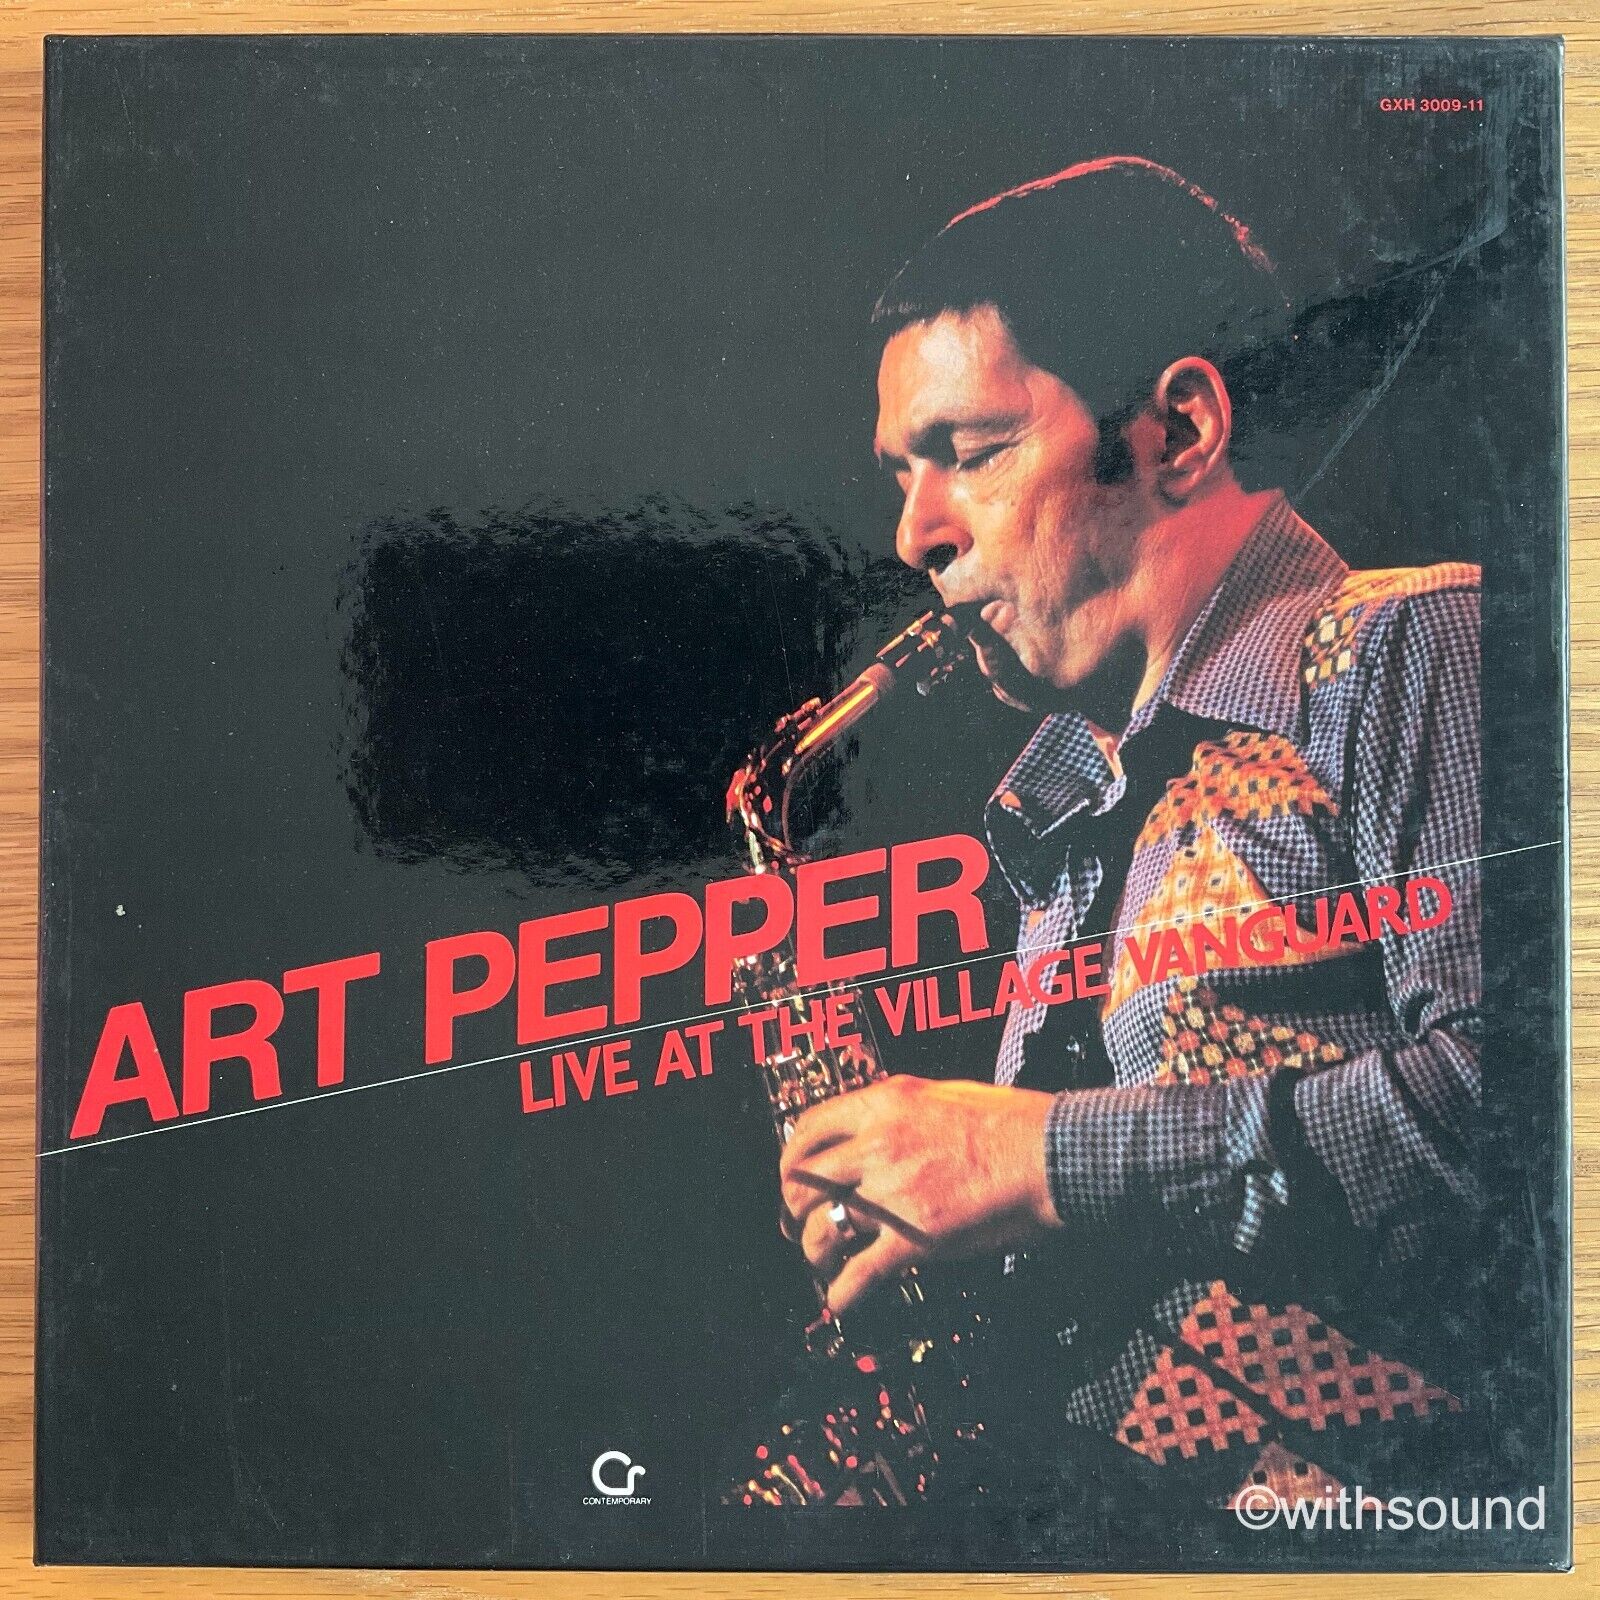 ART PEPPER Live At The Village Vanguard JAPAN ORIG 3 LP BOX 1980 GXH 3009-11 2